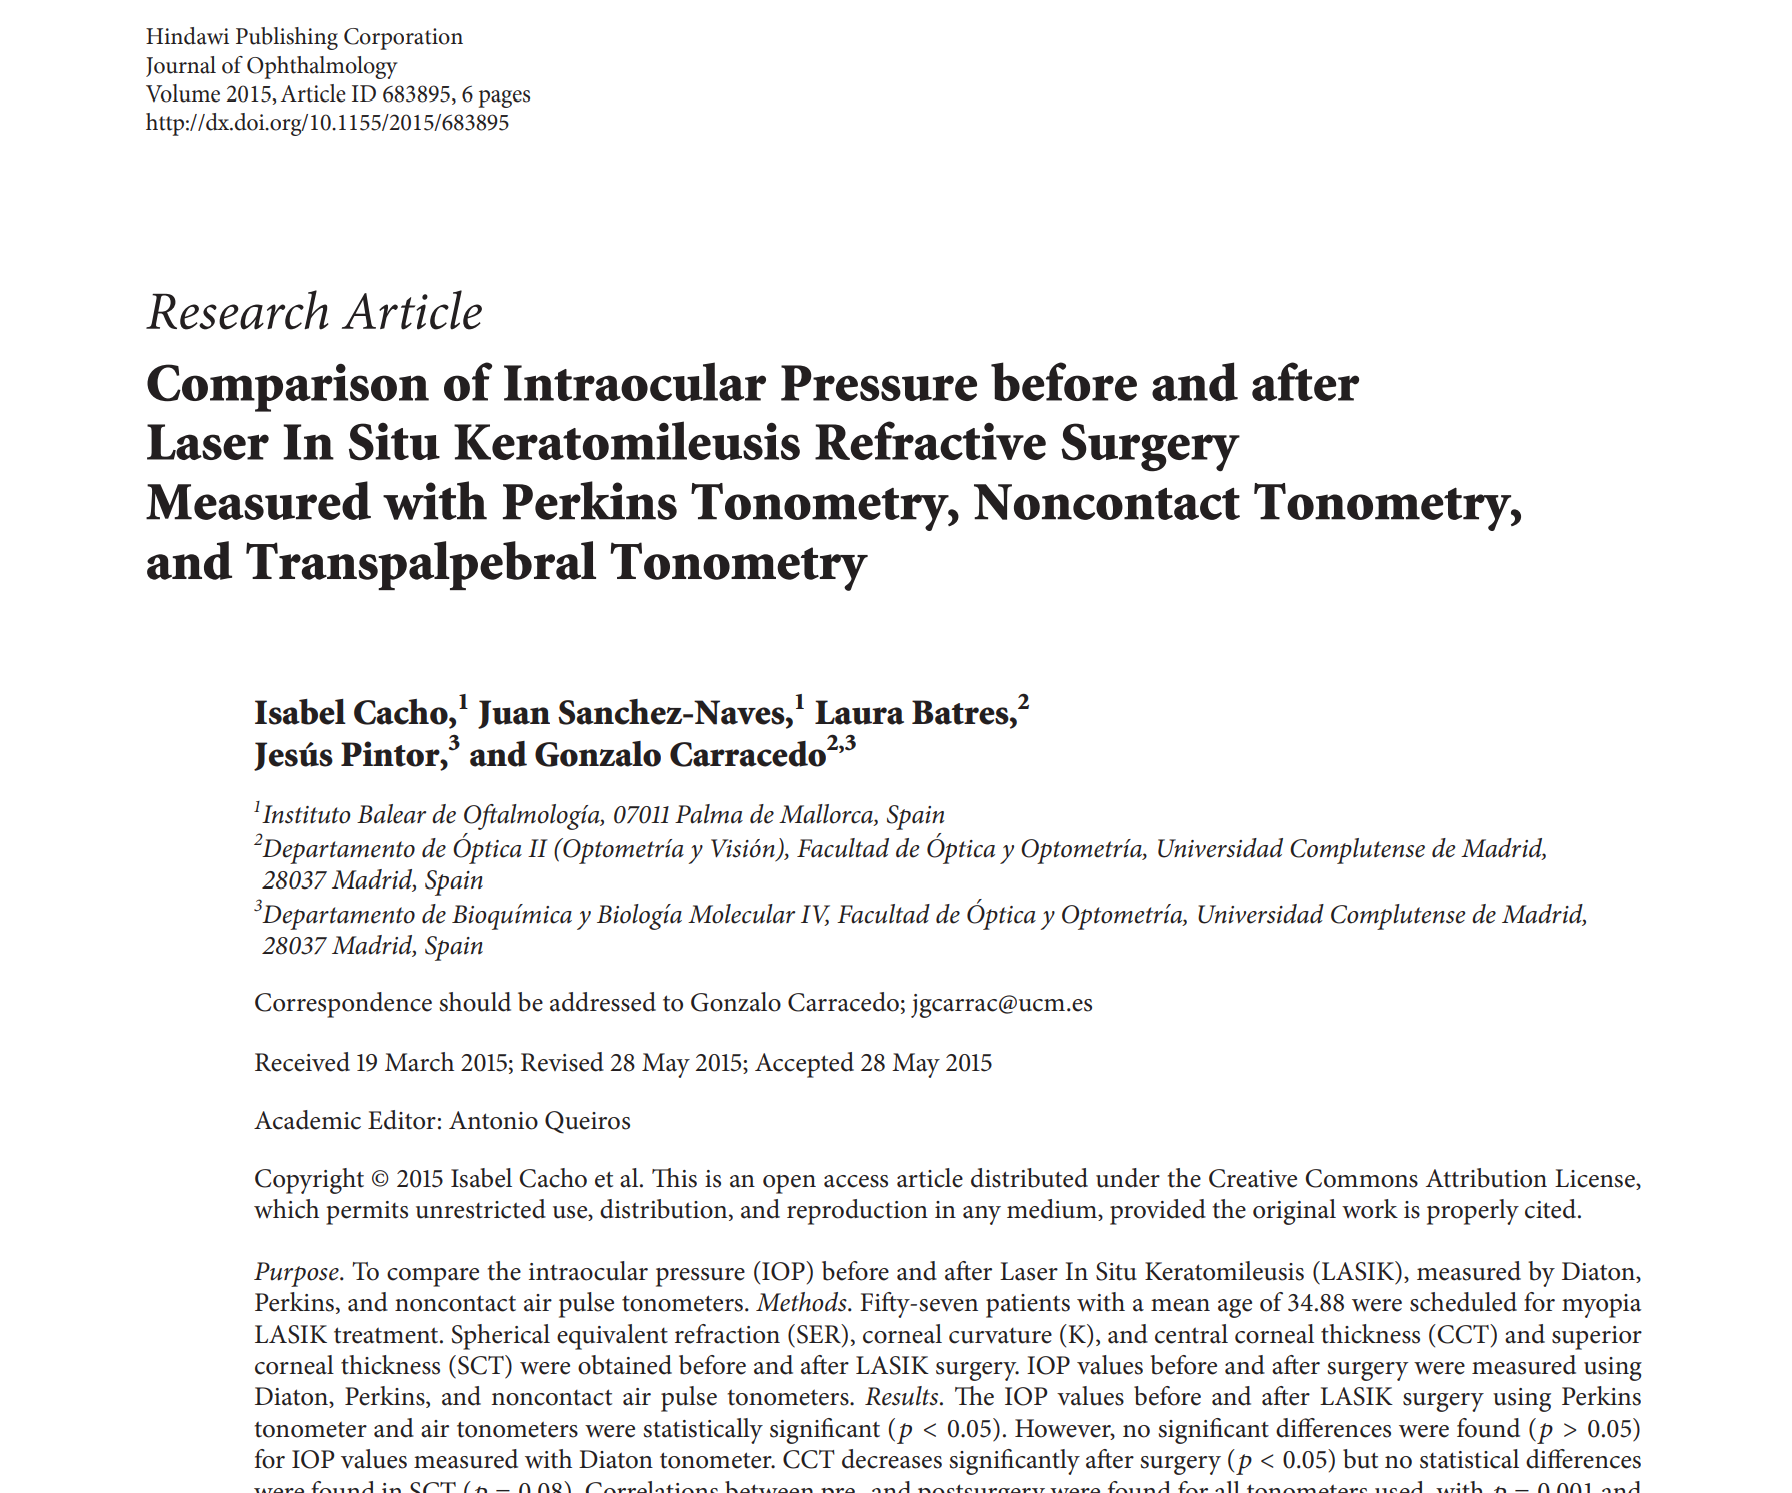 Transpalpebral tonometer Diaton Clinical Study